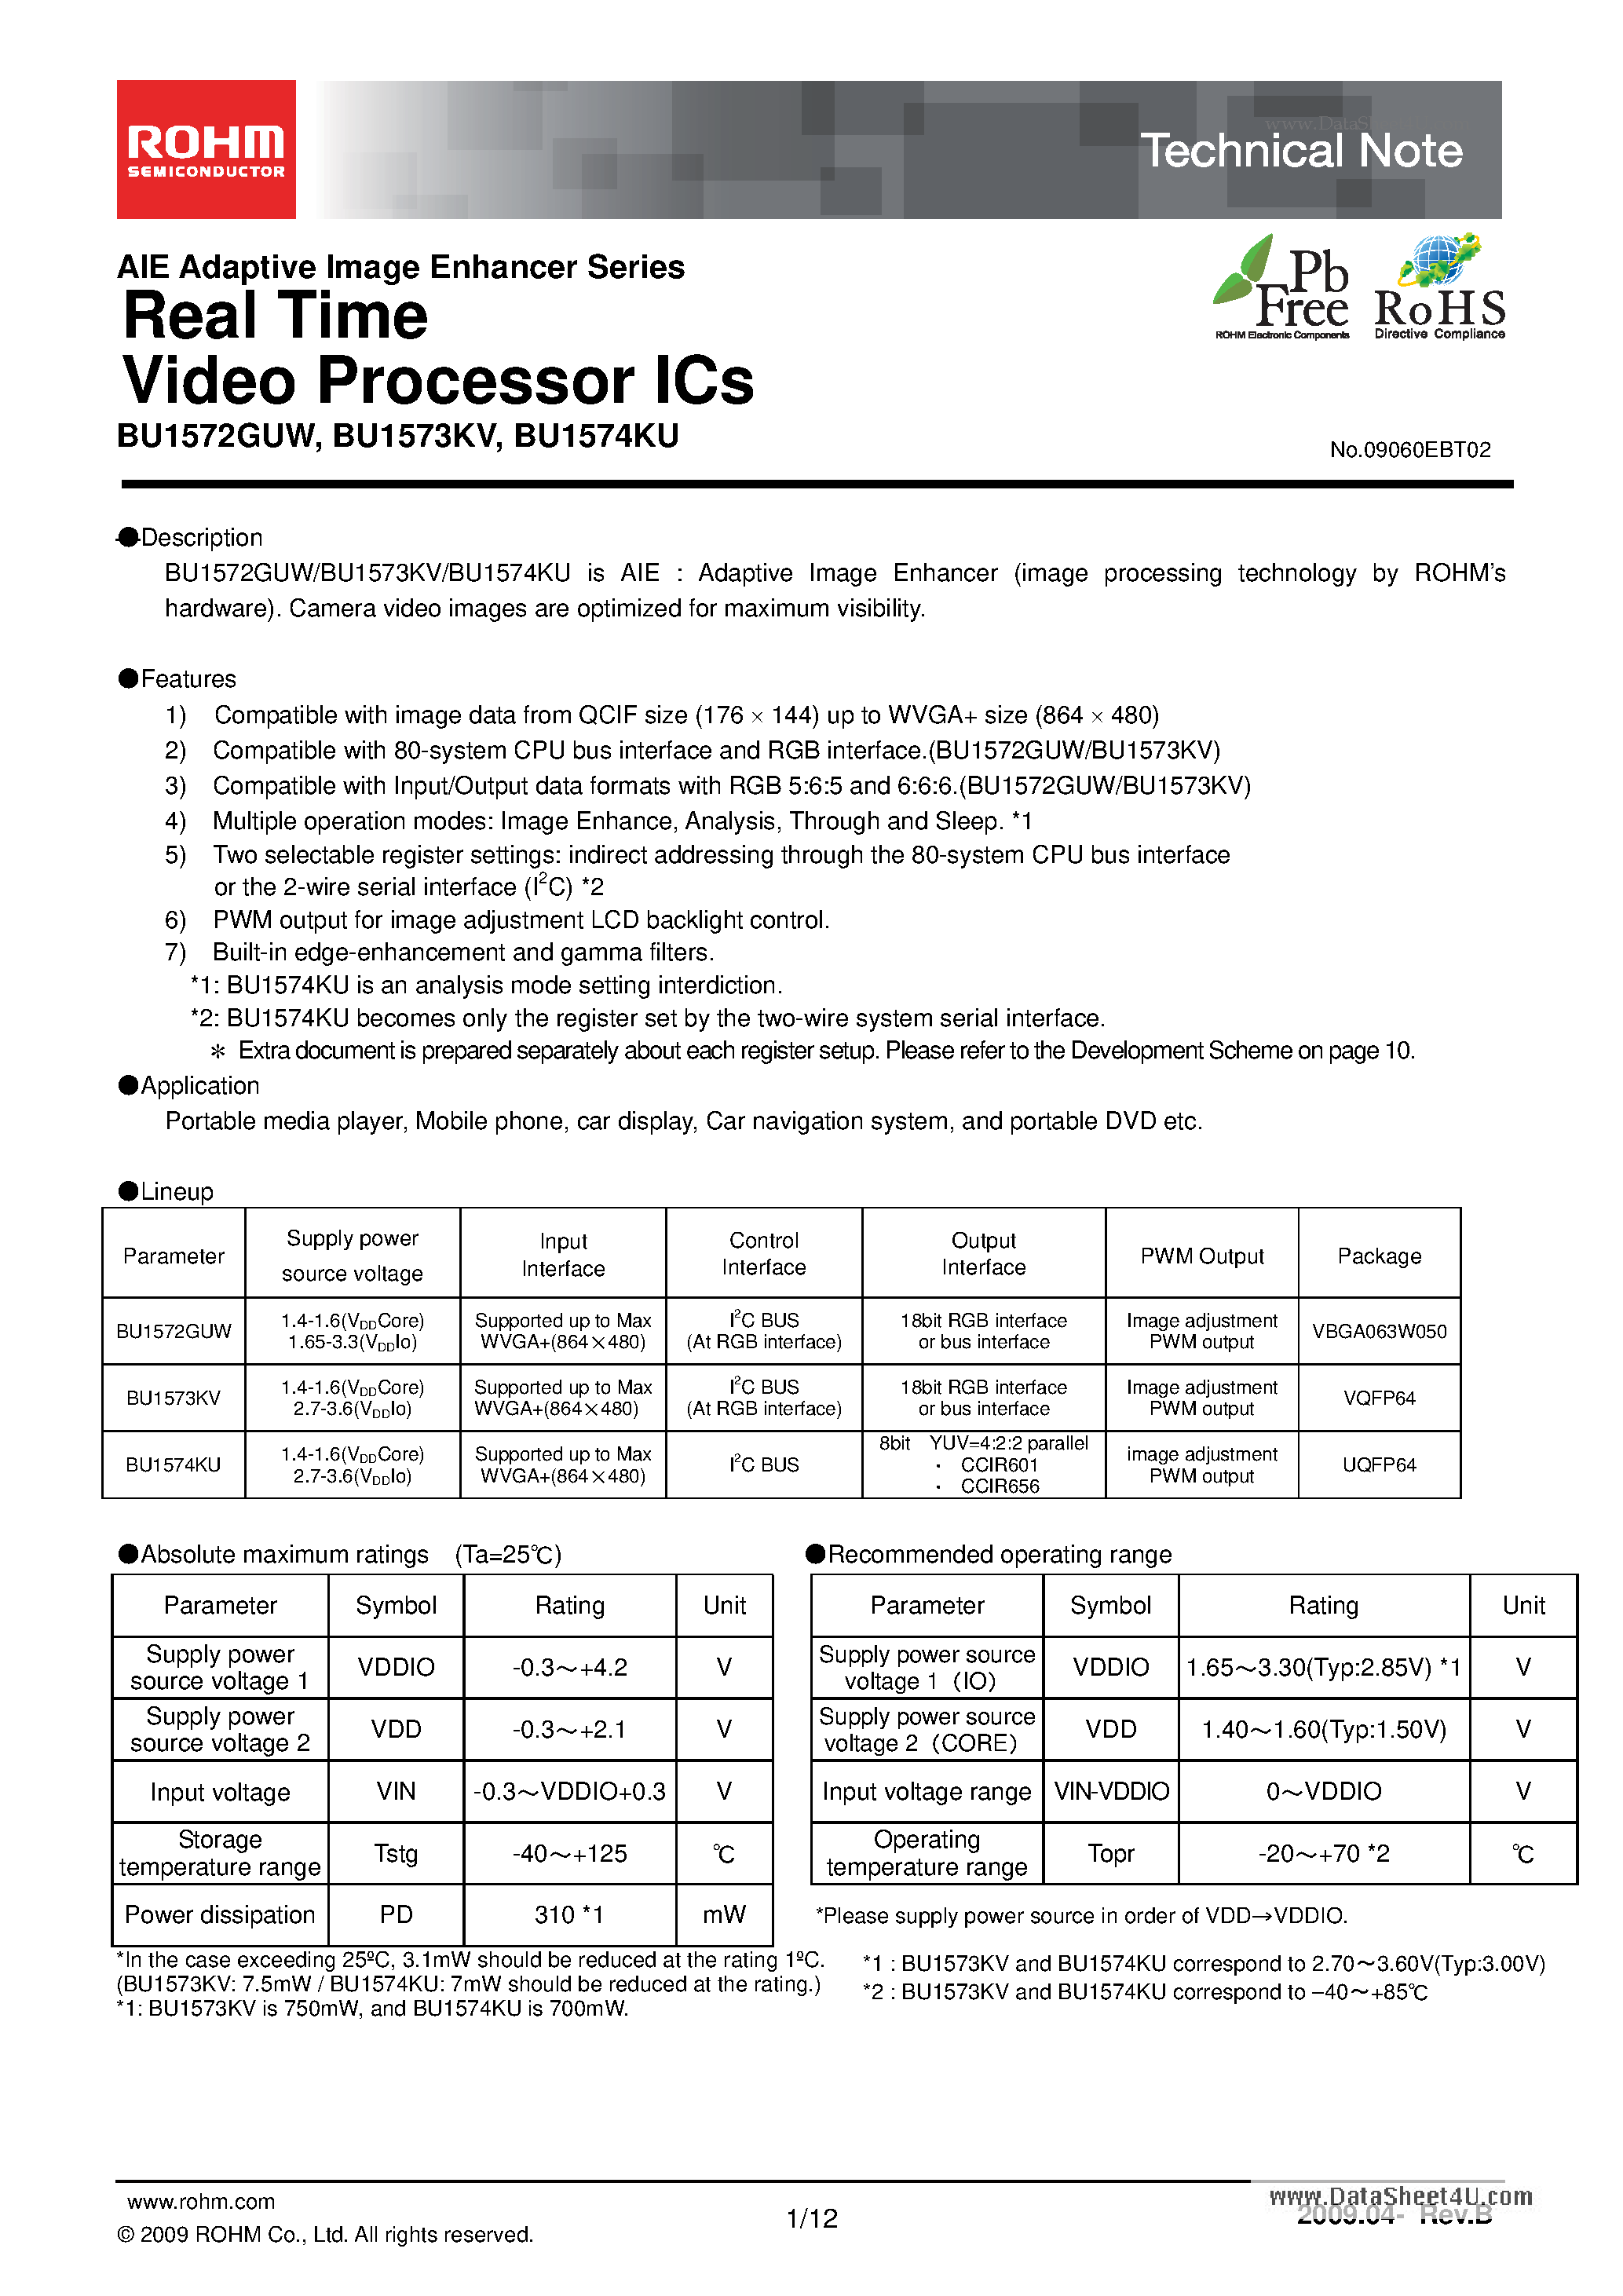 Даташит BU1573KV-Real Time Video Processor ICs страница 1